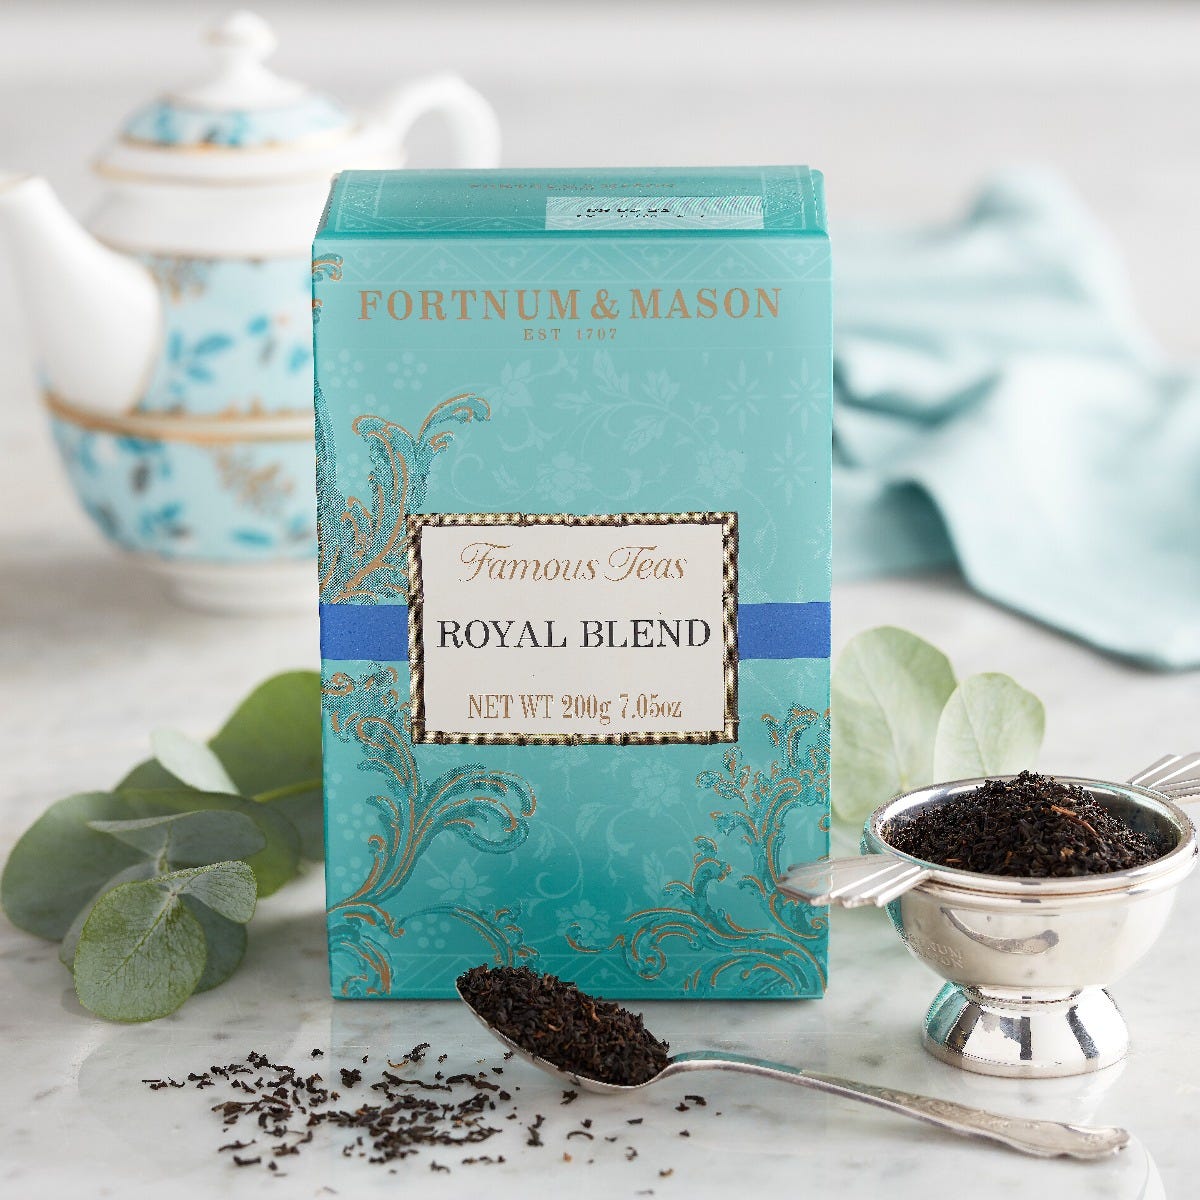 Royal Blend Black Tea, Carton, 200g, Fortnum & Mason